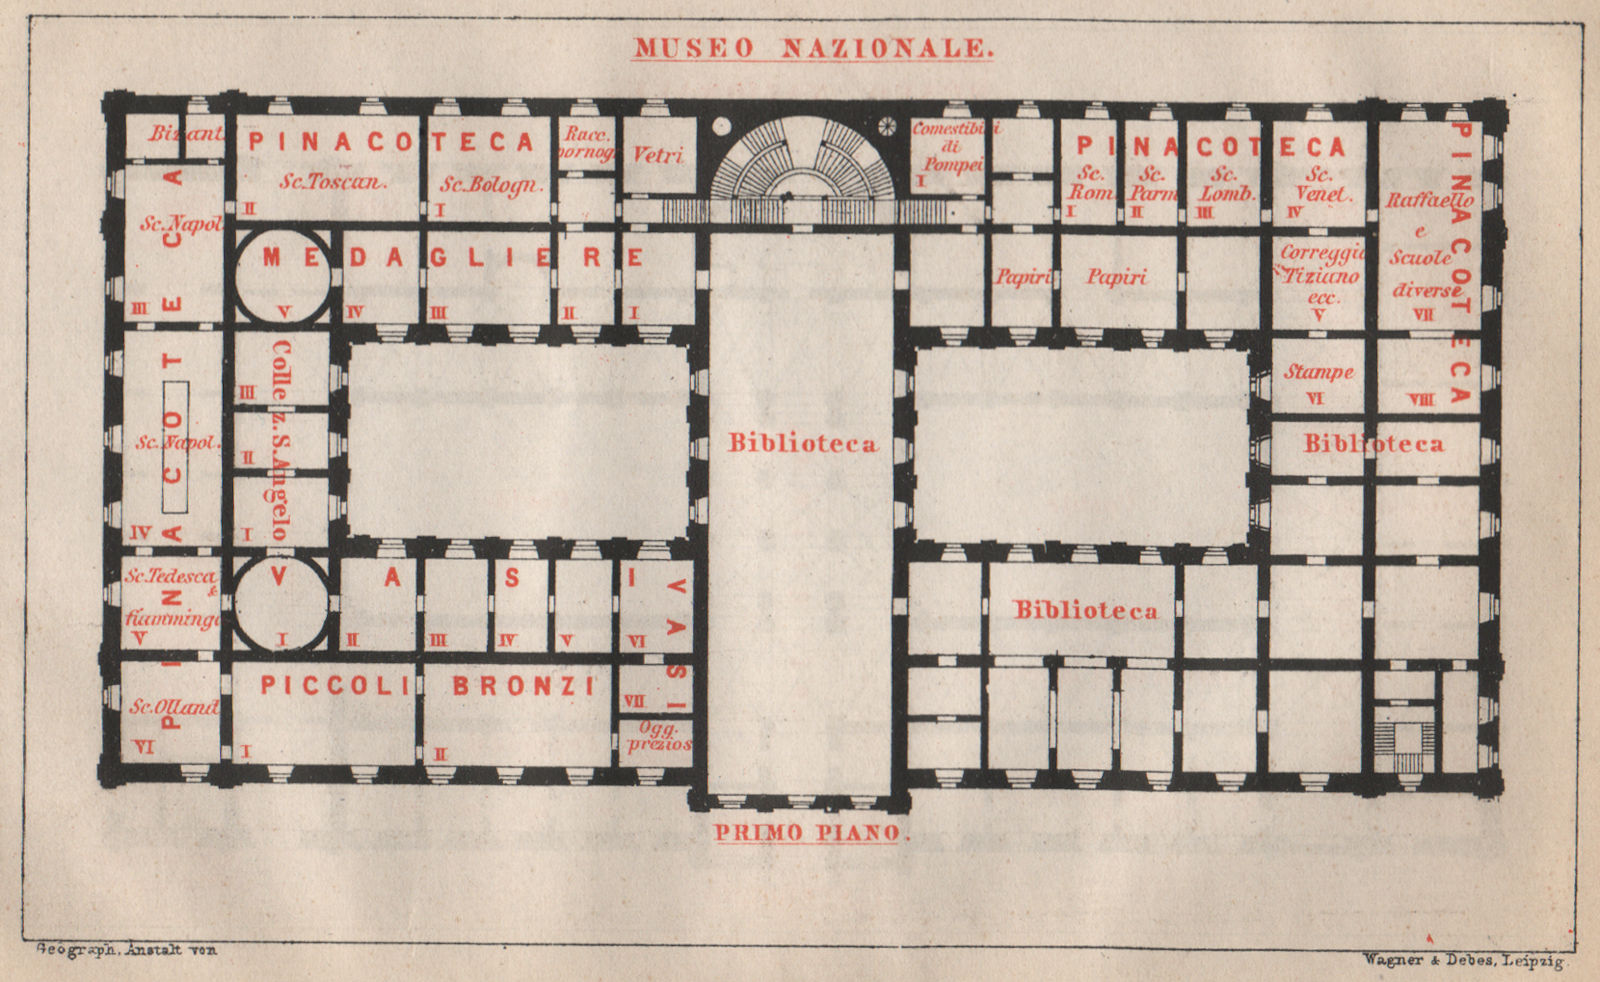 MUSEO NAZIONALE ROMANO; PRIMO PIANO first floor plan. Rome mappa 1896 old